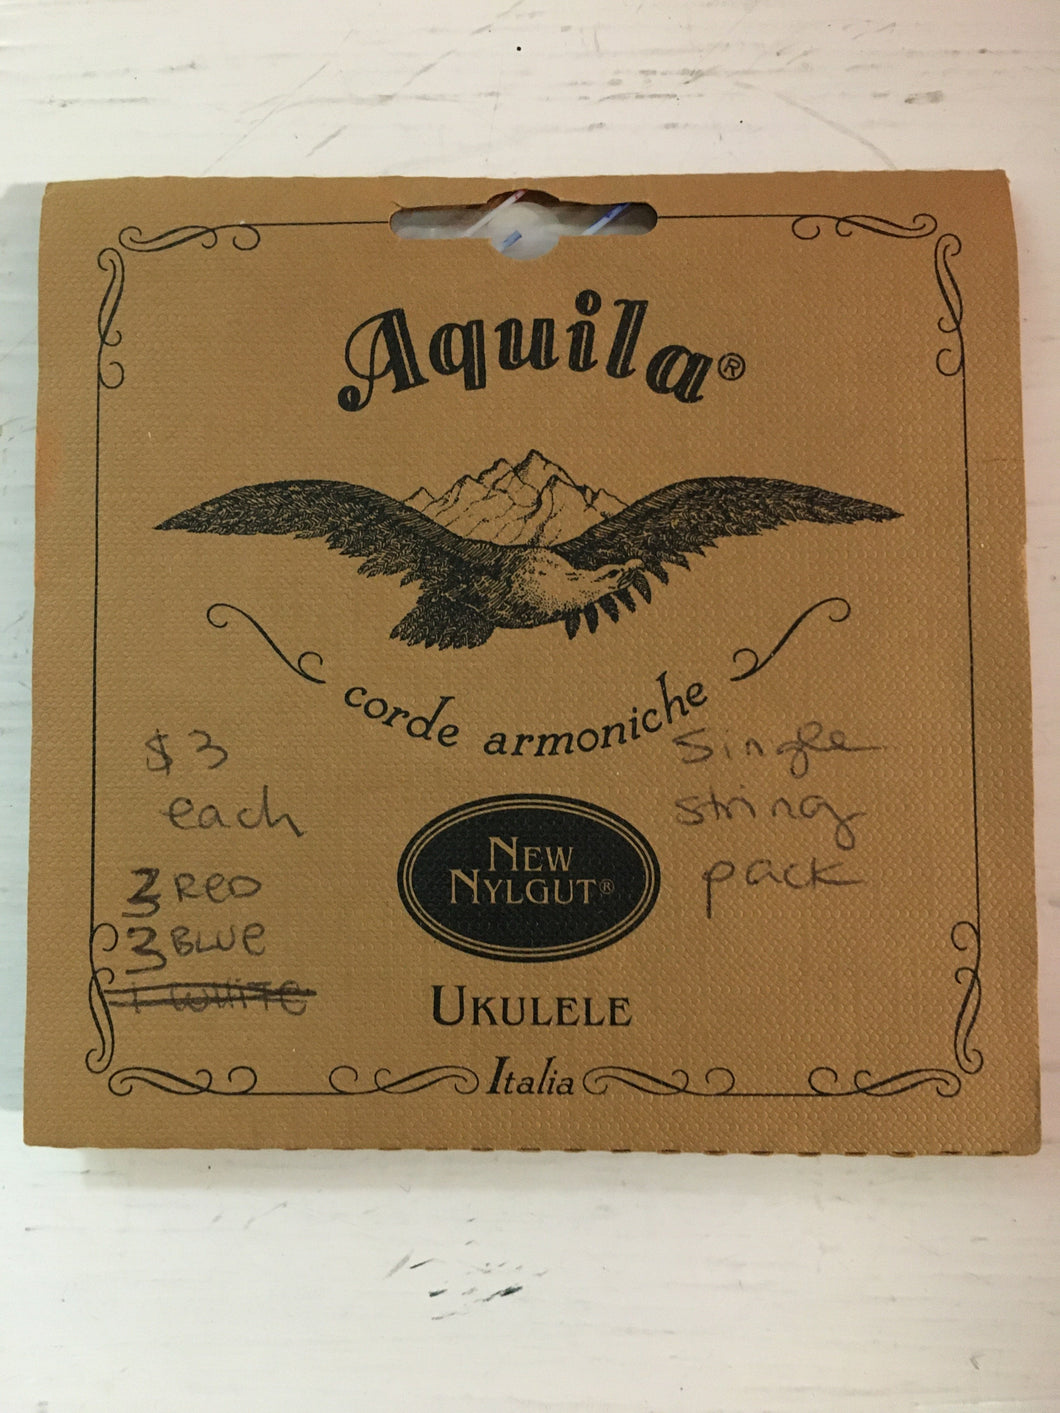 Single Strings - Aquila New Nylgut 3 red, 3 blue single strings